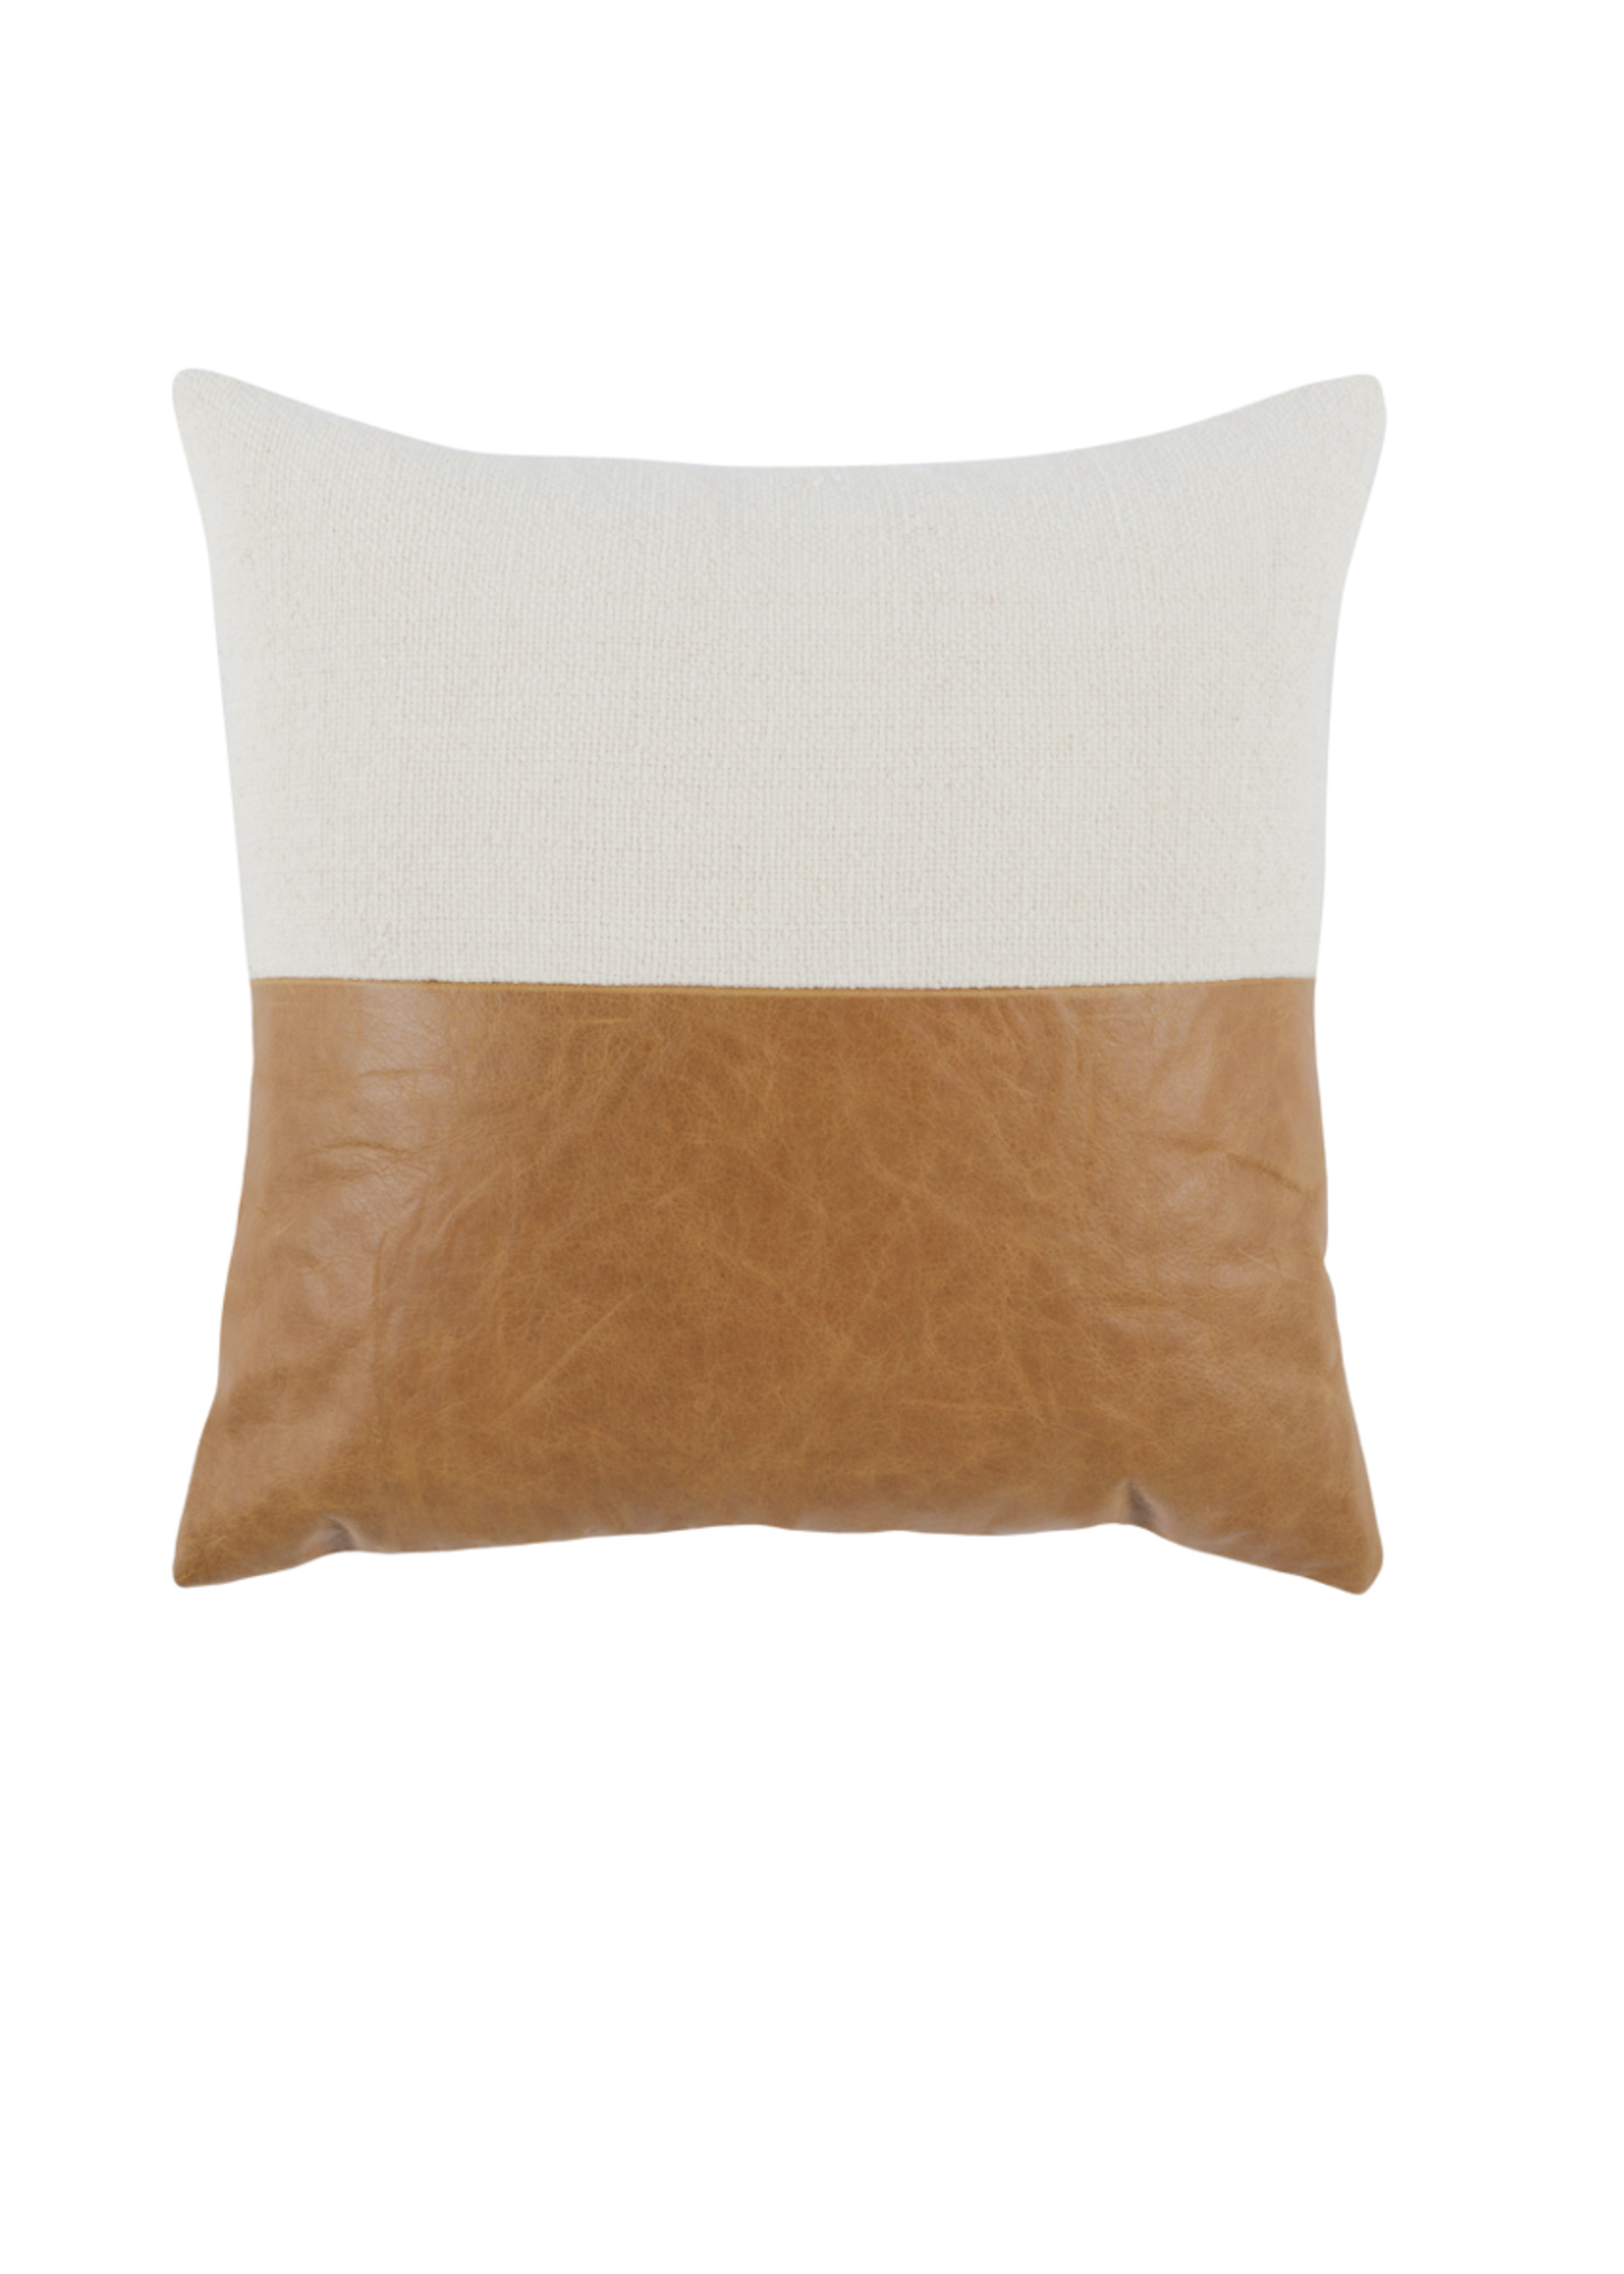 Leather & Cream Blocked Pillow 20x20